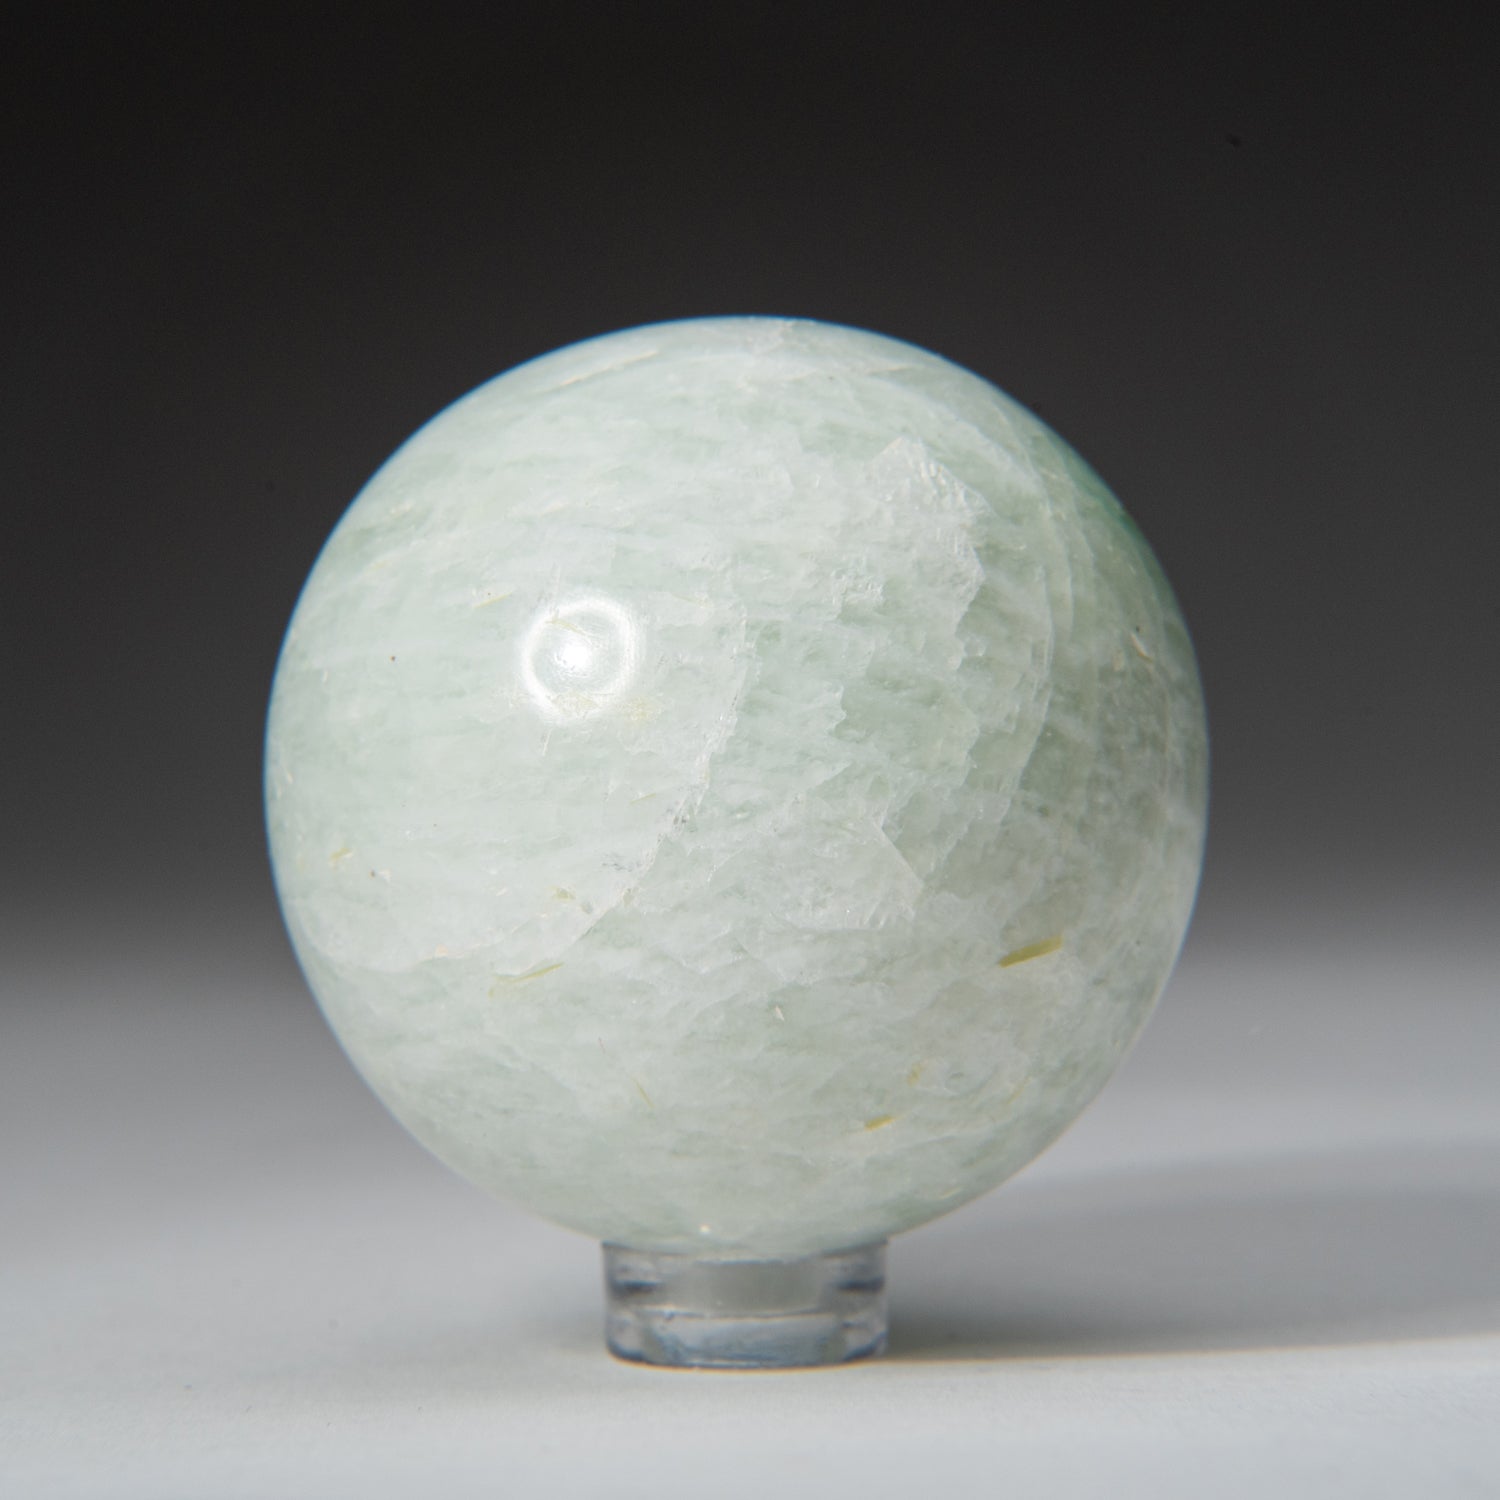 Genuine Polished Aquamarine Sphere (2") with Acrylic Display Stand